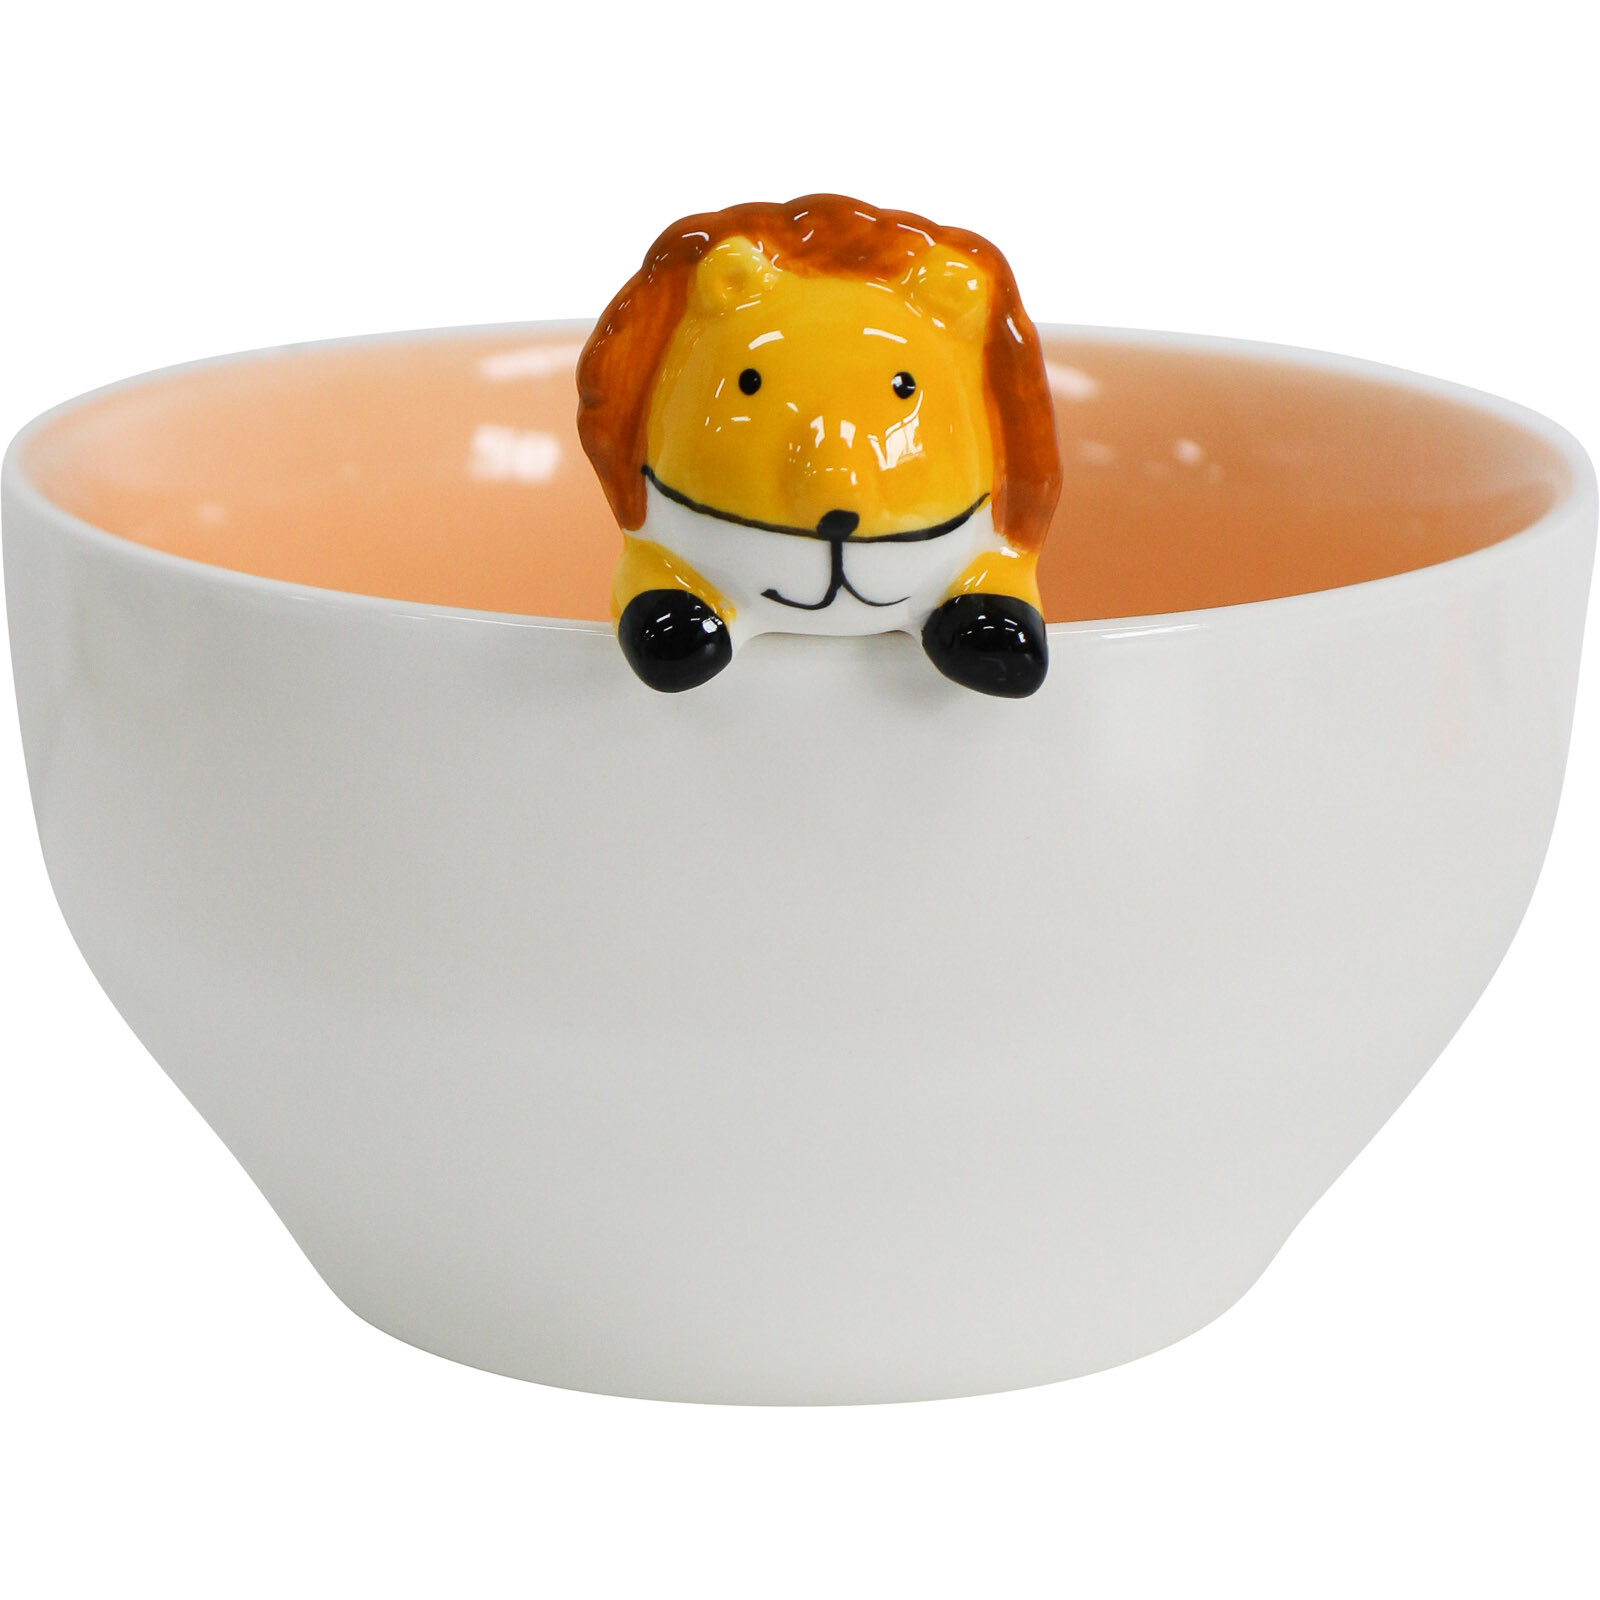 Lion bowl